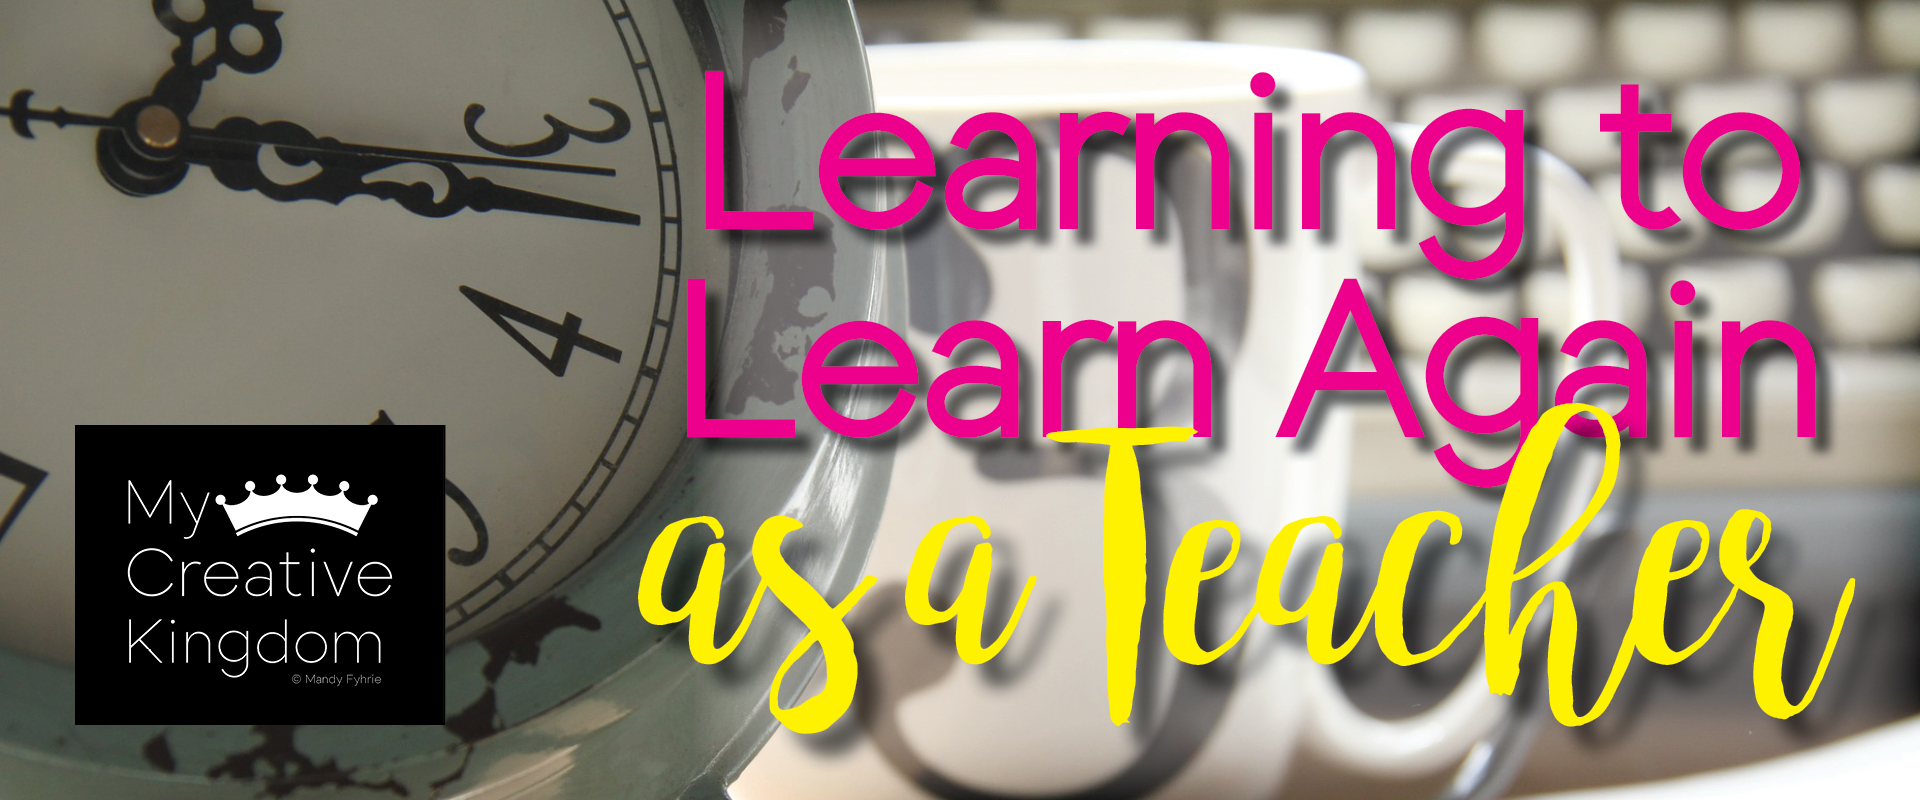 Teachers: Learning to Learn Again